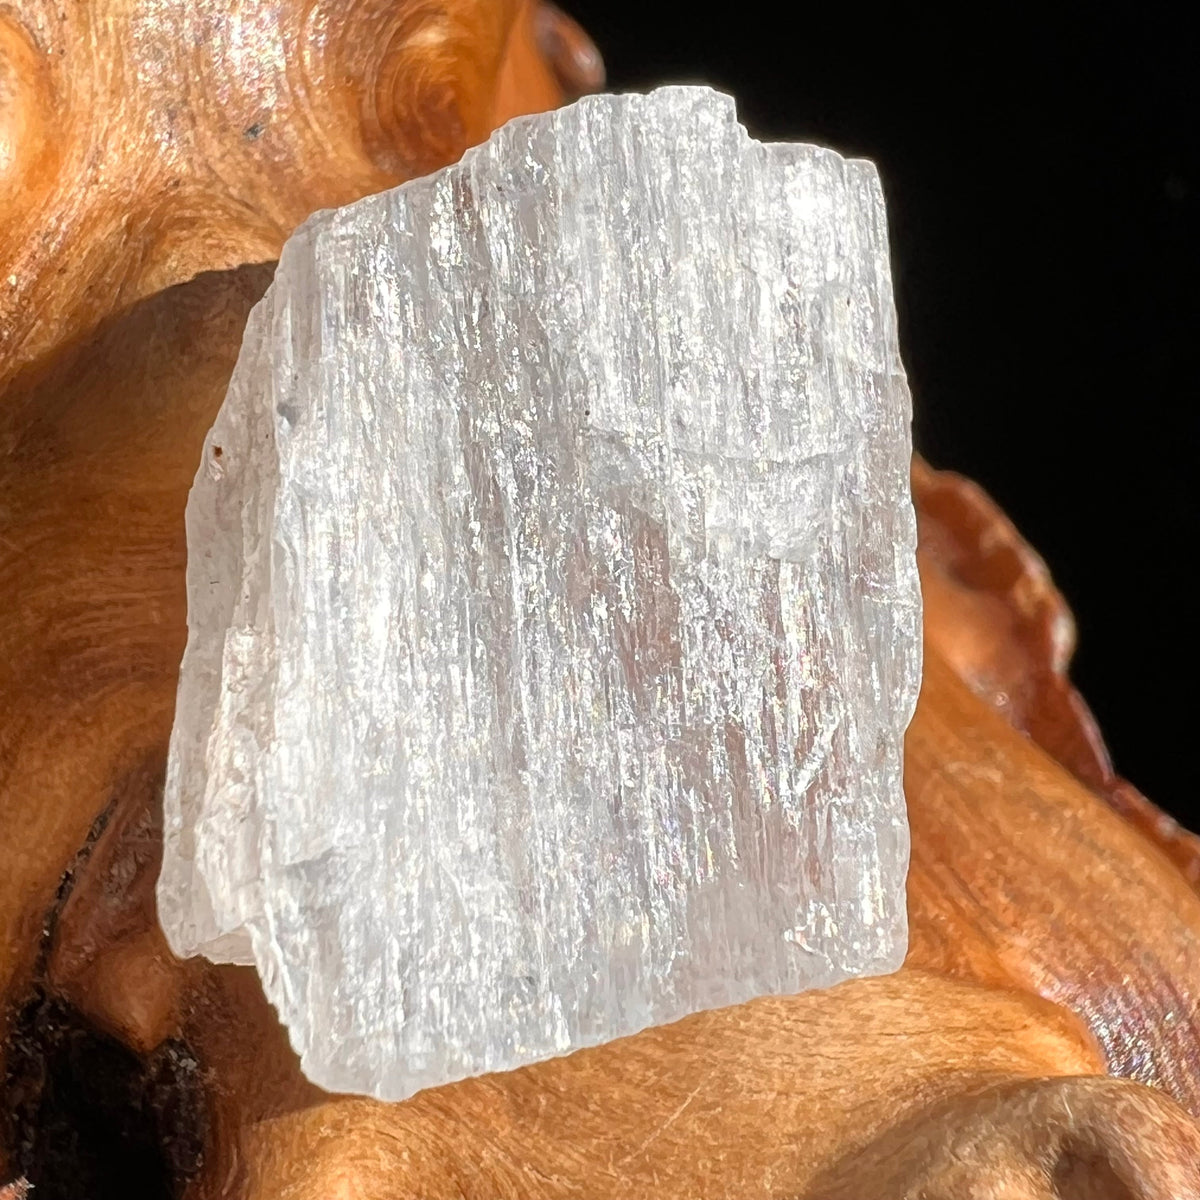 Petalite Crystal "Stone of the Angels" #55-Moldavite Life